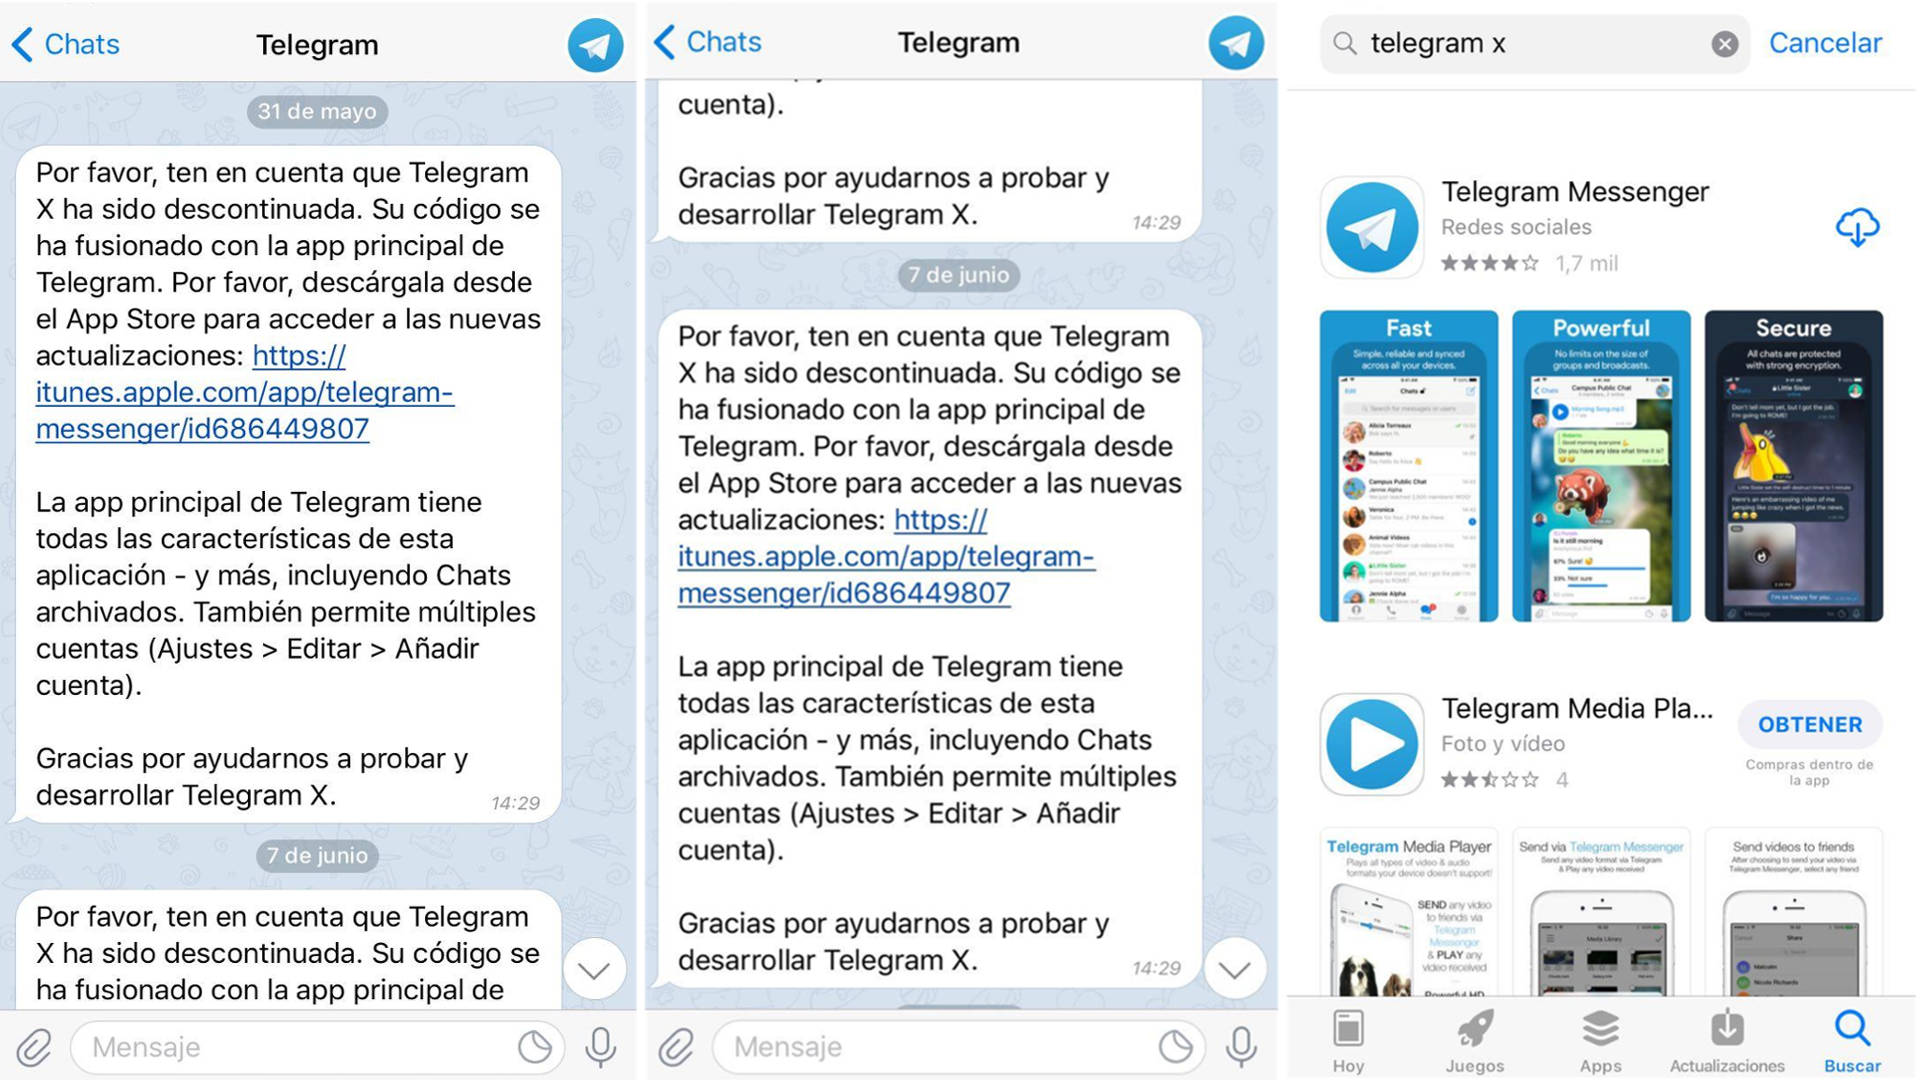 Telegram x ios is retina display worth it macbook